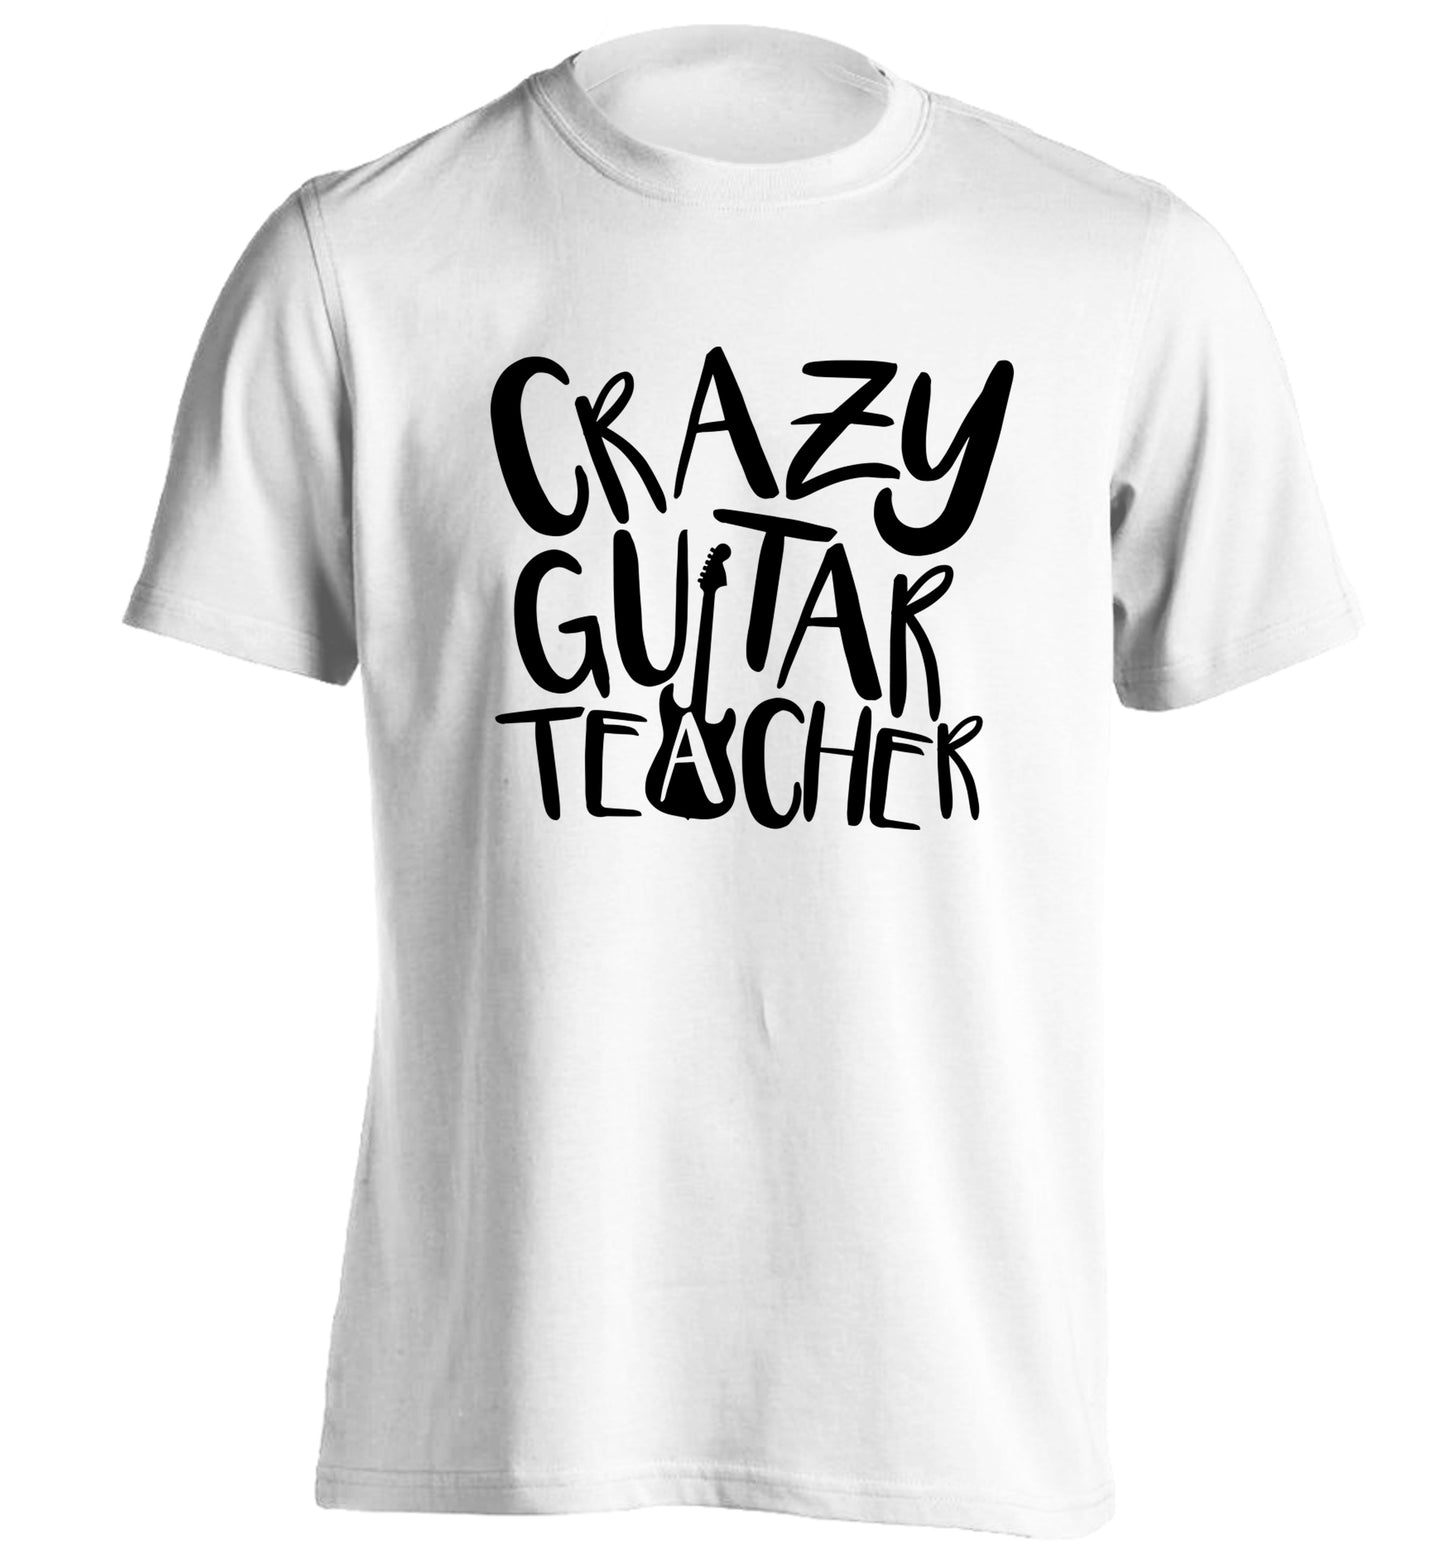 Crazy guitar teacher adults unisex white Tshirt 2XL